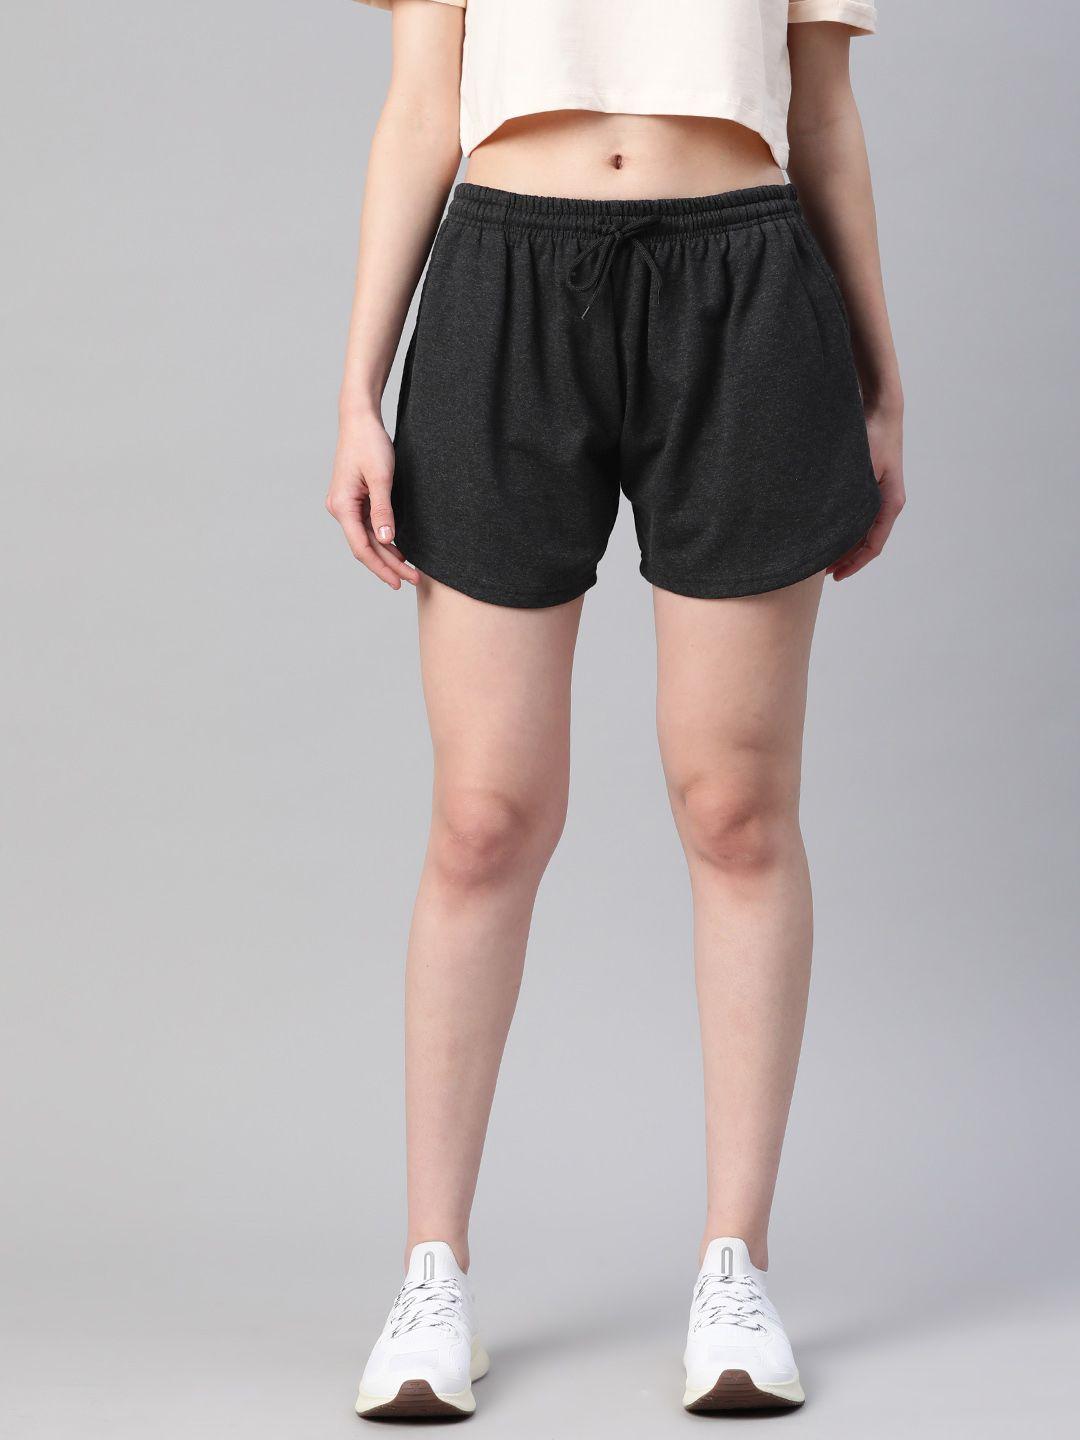 laabha-outdoor-hot-pants-shorts